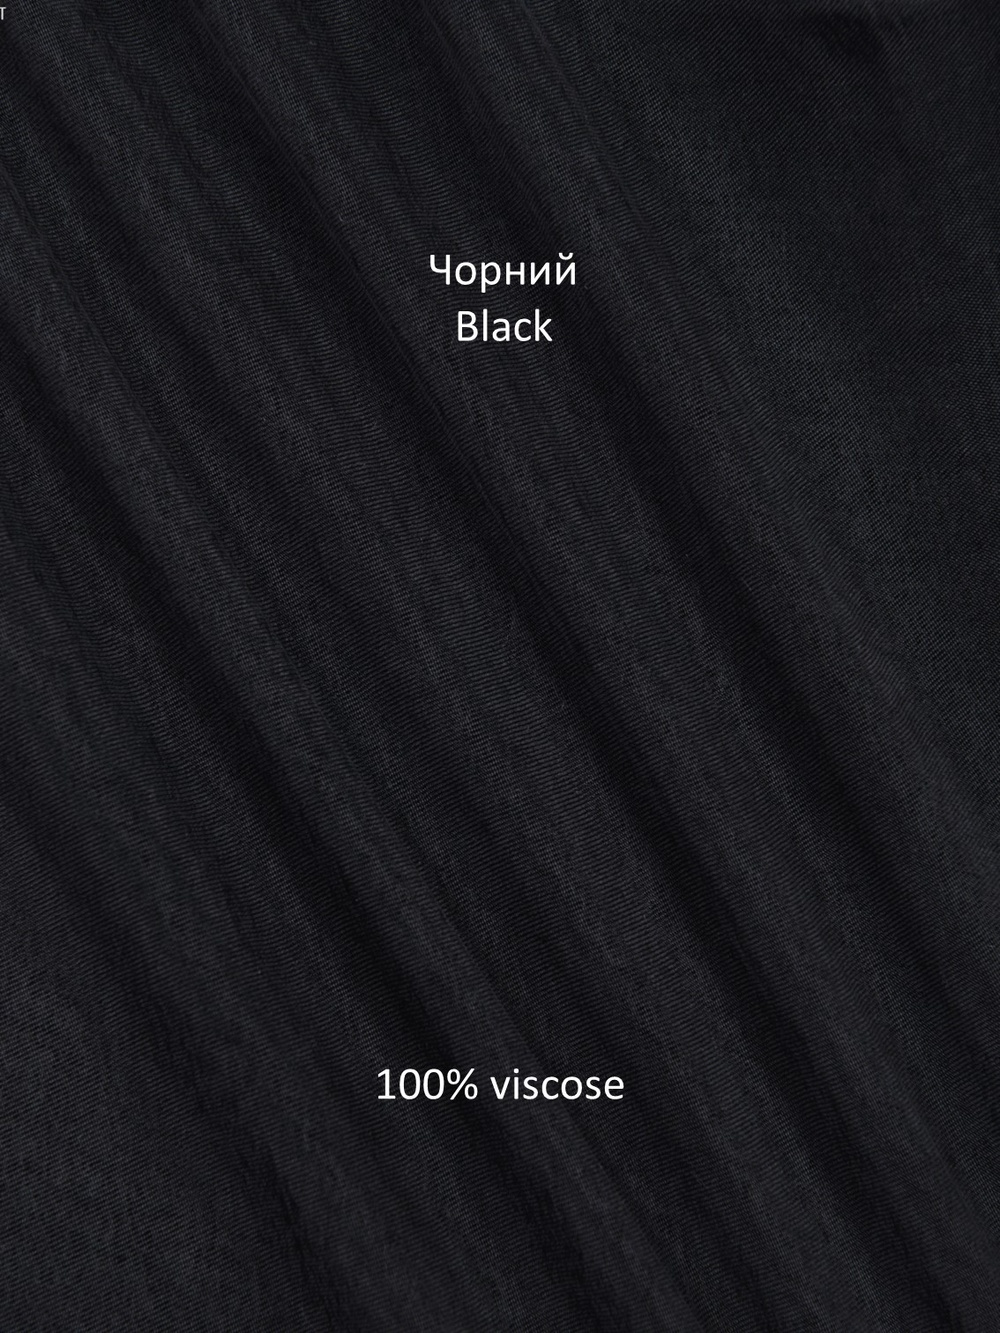 Basic shirt color black